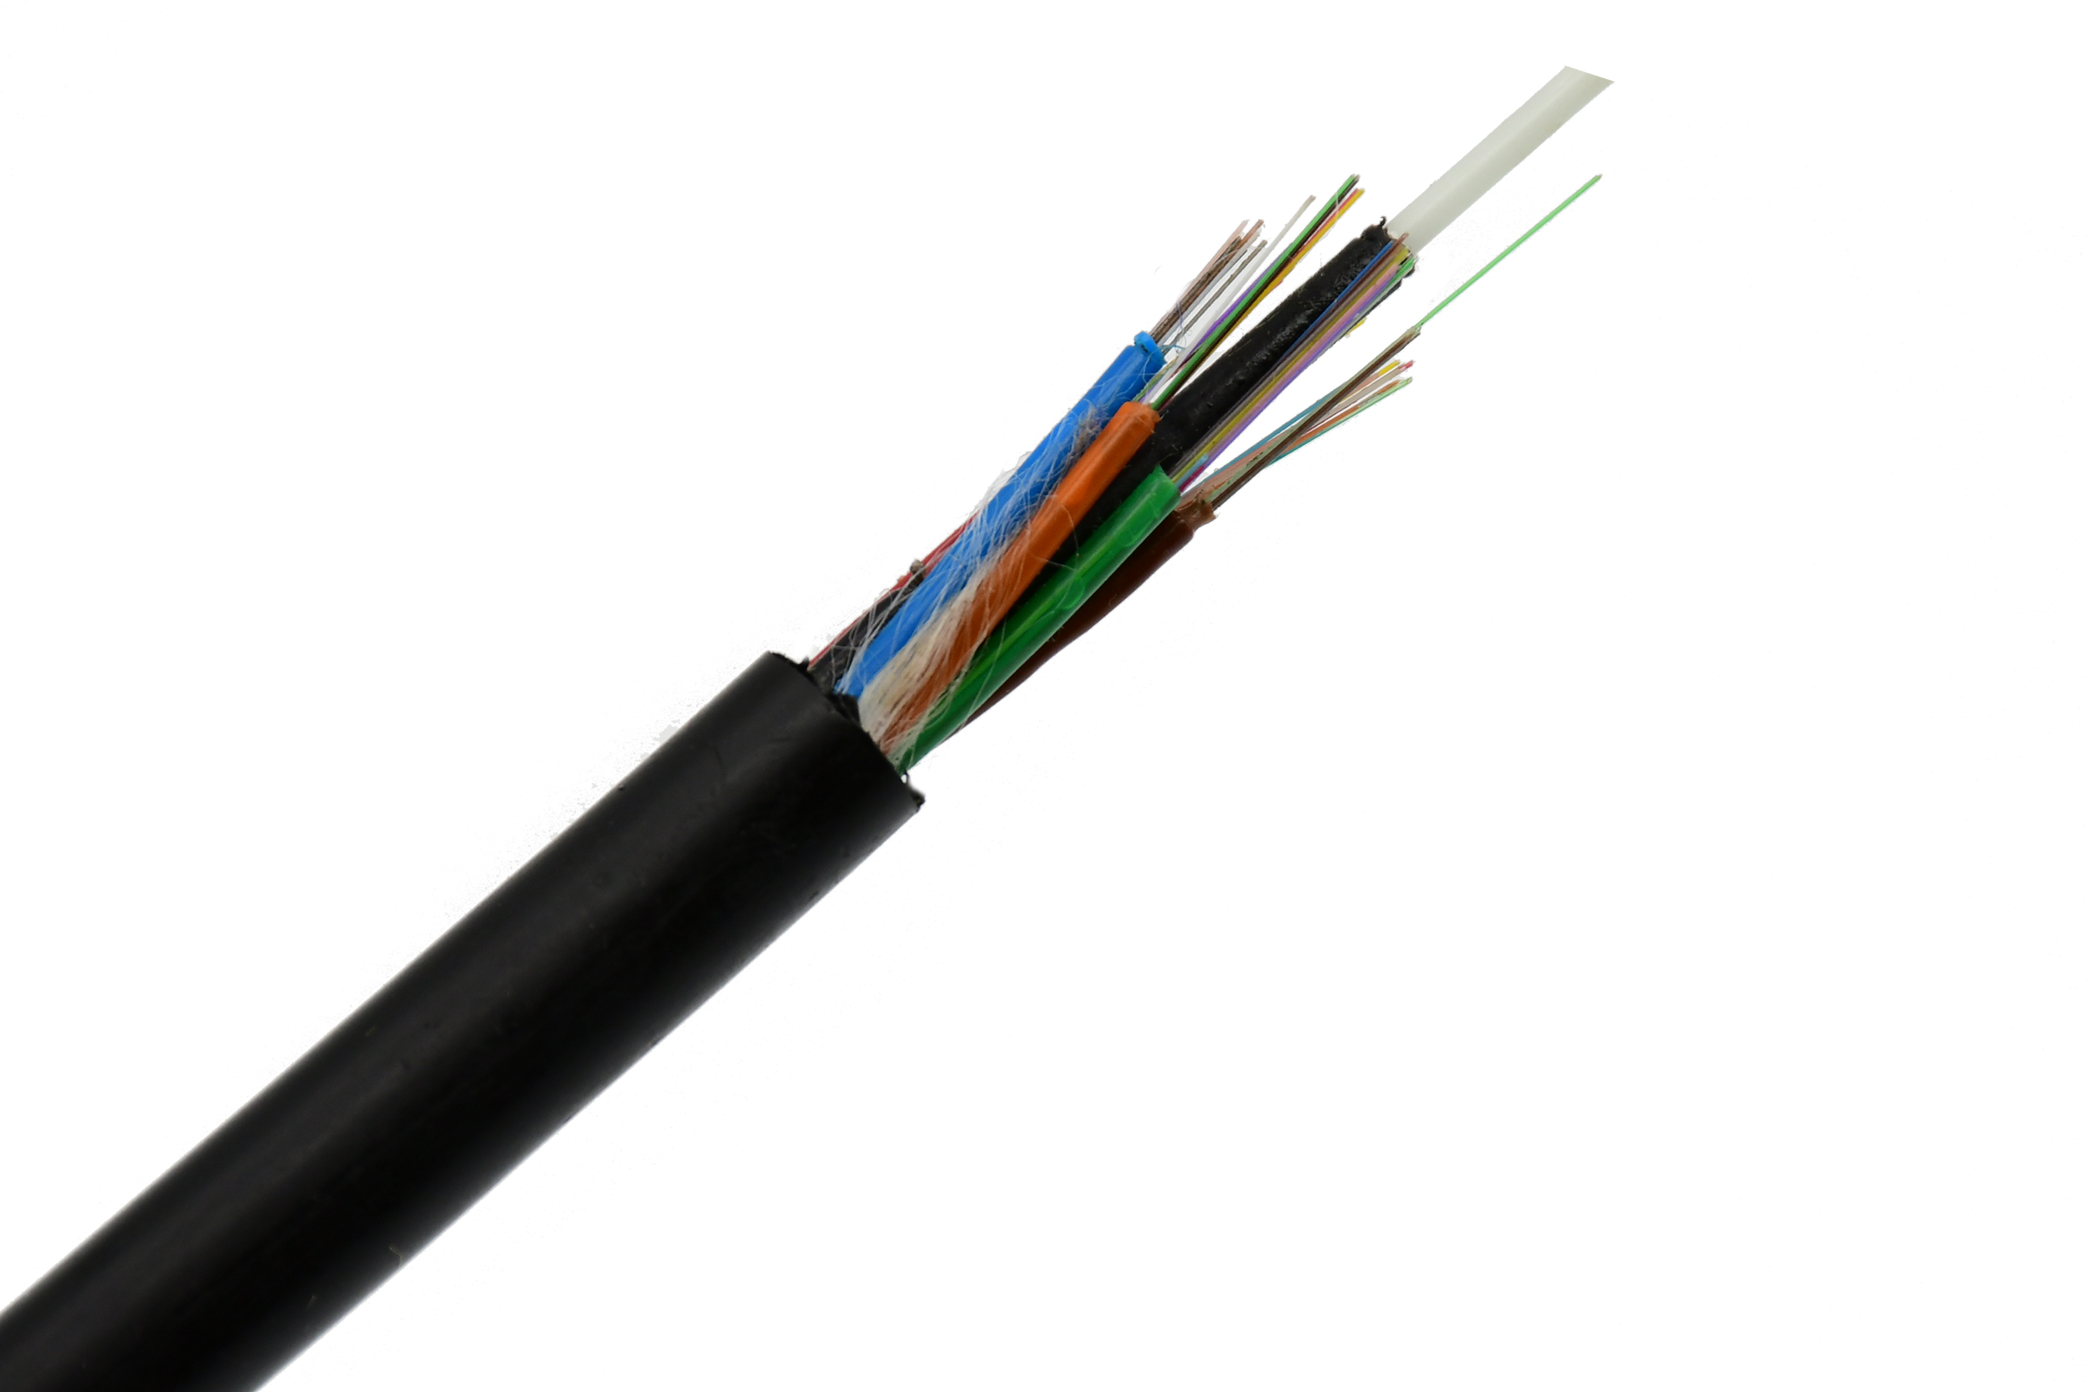 Duct Outdoor Fiber Optic Cable GYFTY 12F 24F 48F 96F 144F 288F Single Mode G652D PE Black